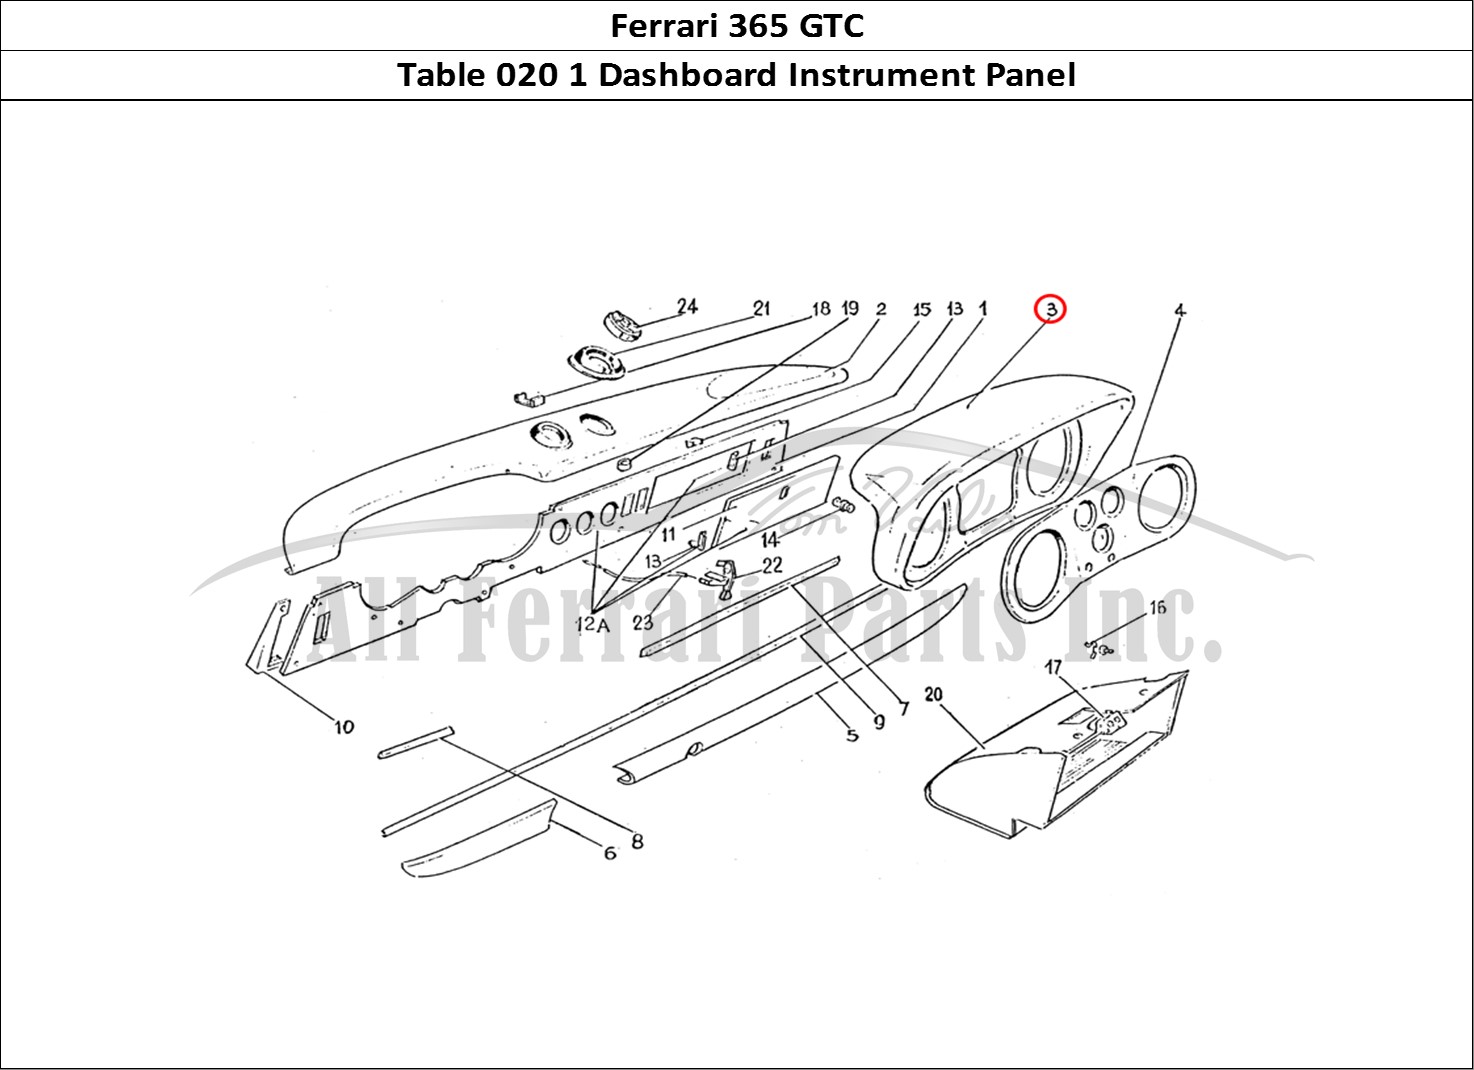 Ferrari Parts Ferrari 330 GTC (Coachwork) Page 020 Dash board